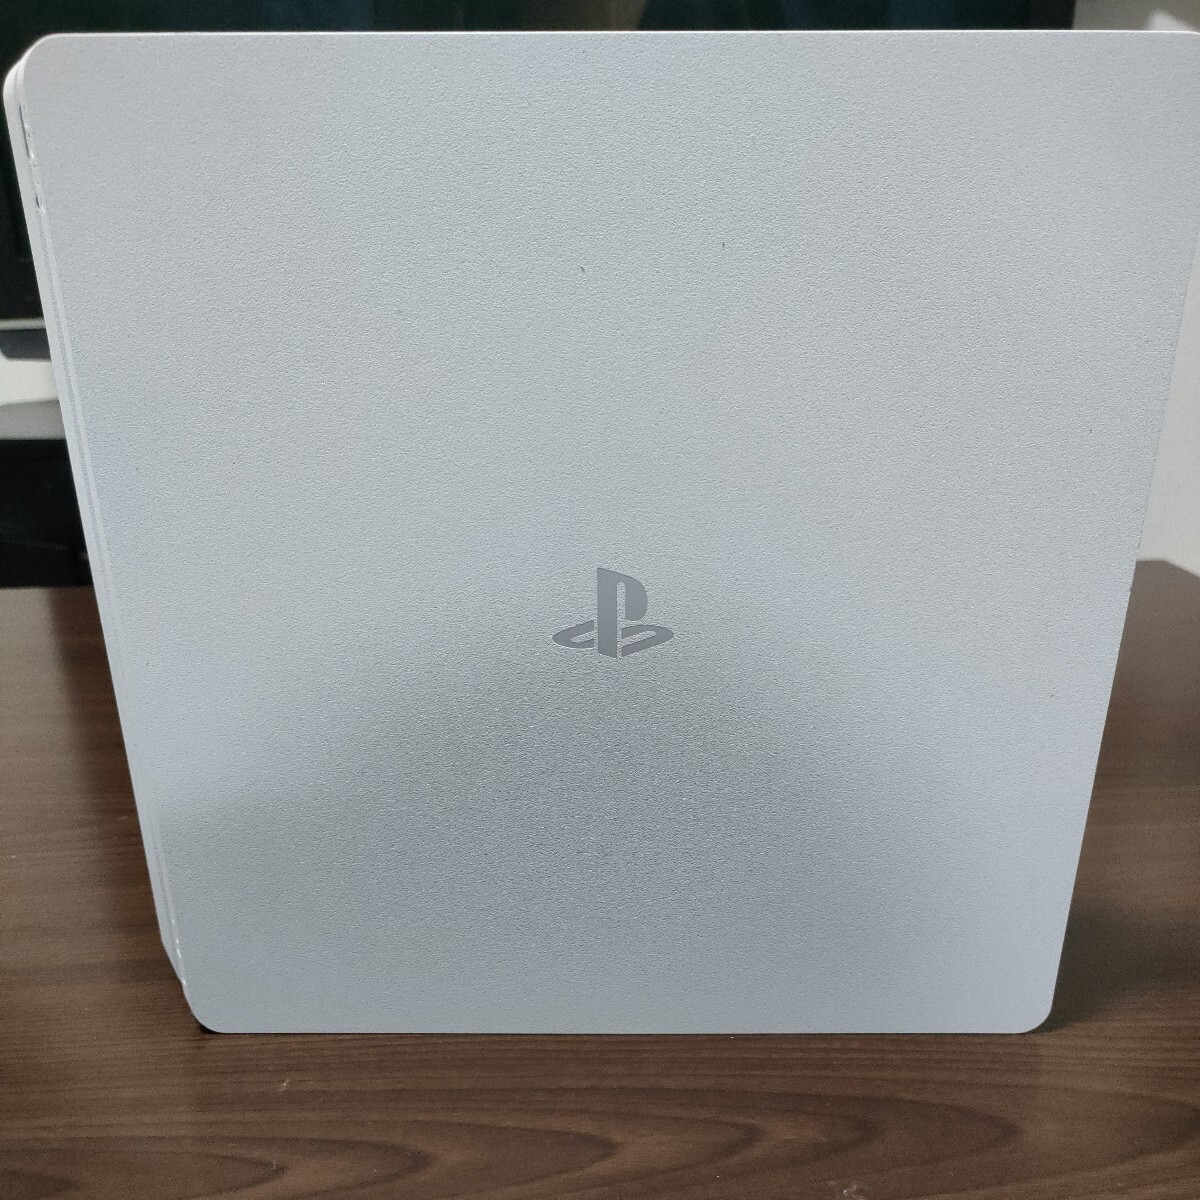 PS4 プレステ4 本体 プレイステーション4 Playstation4 Slim CUH-2200AB02 500GB グレイシャーホワイト 白 White 動作確認済 初期化済み